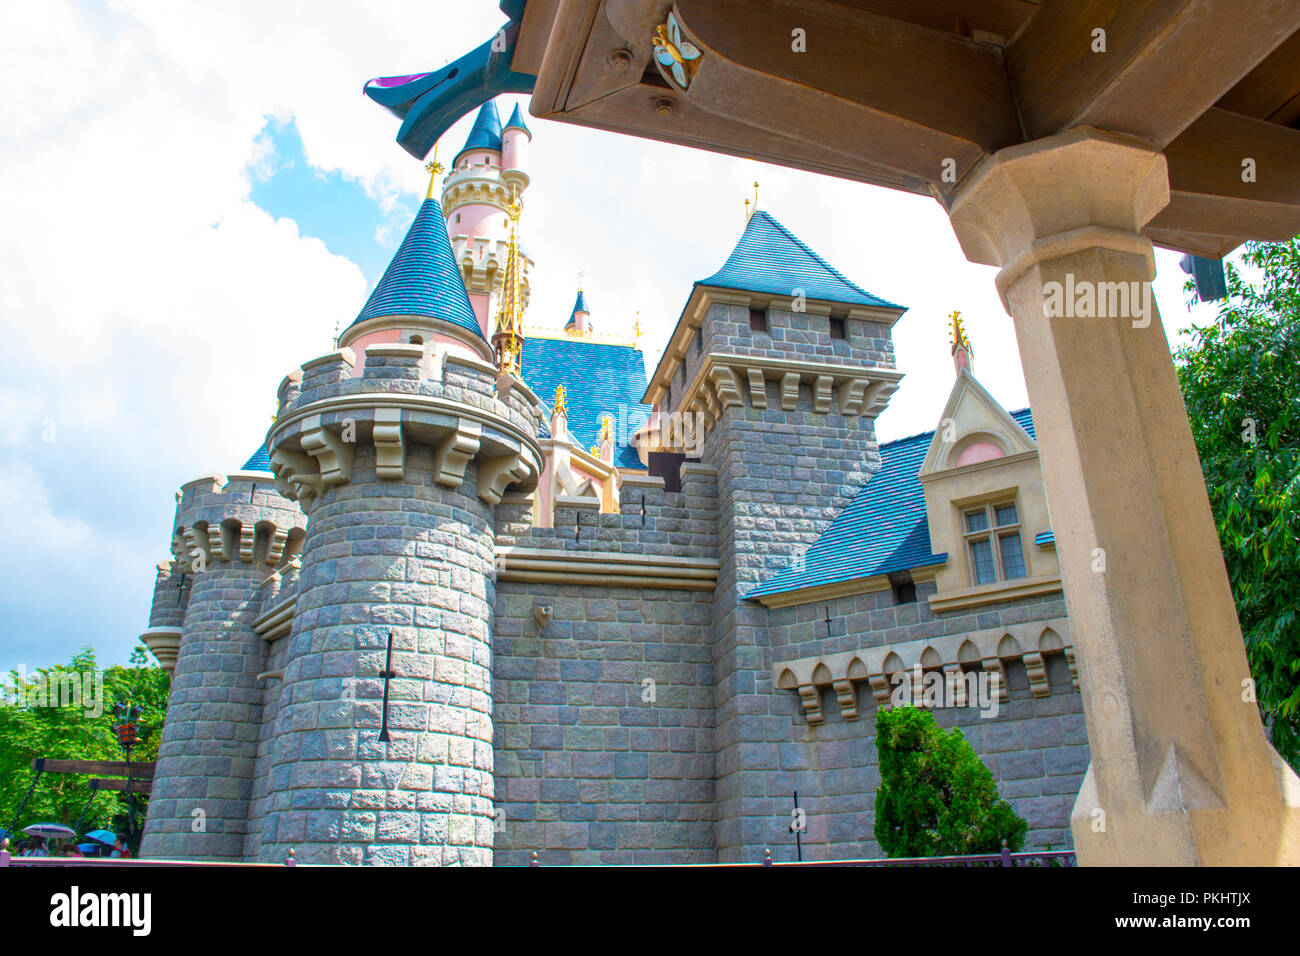 Disneyland Hong Kong, Sleeping Beauty Castle at the center of the park Stock Photo